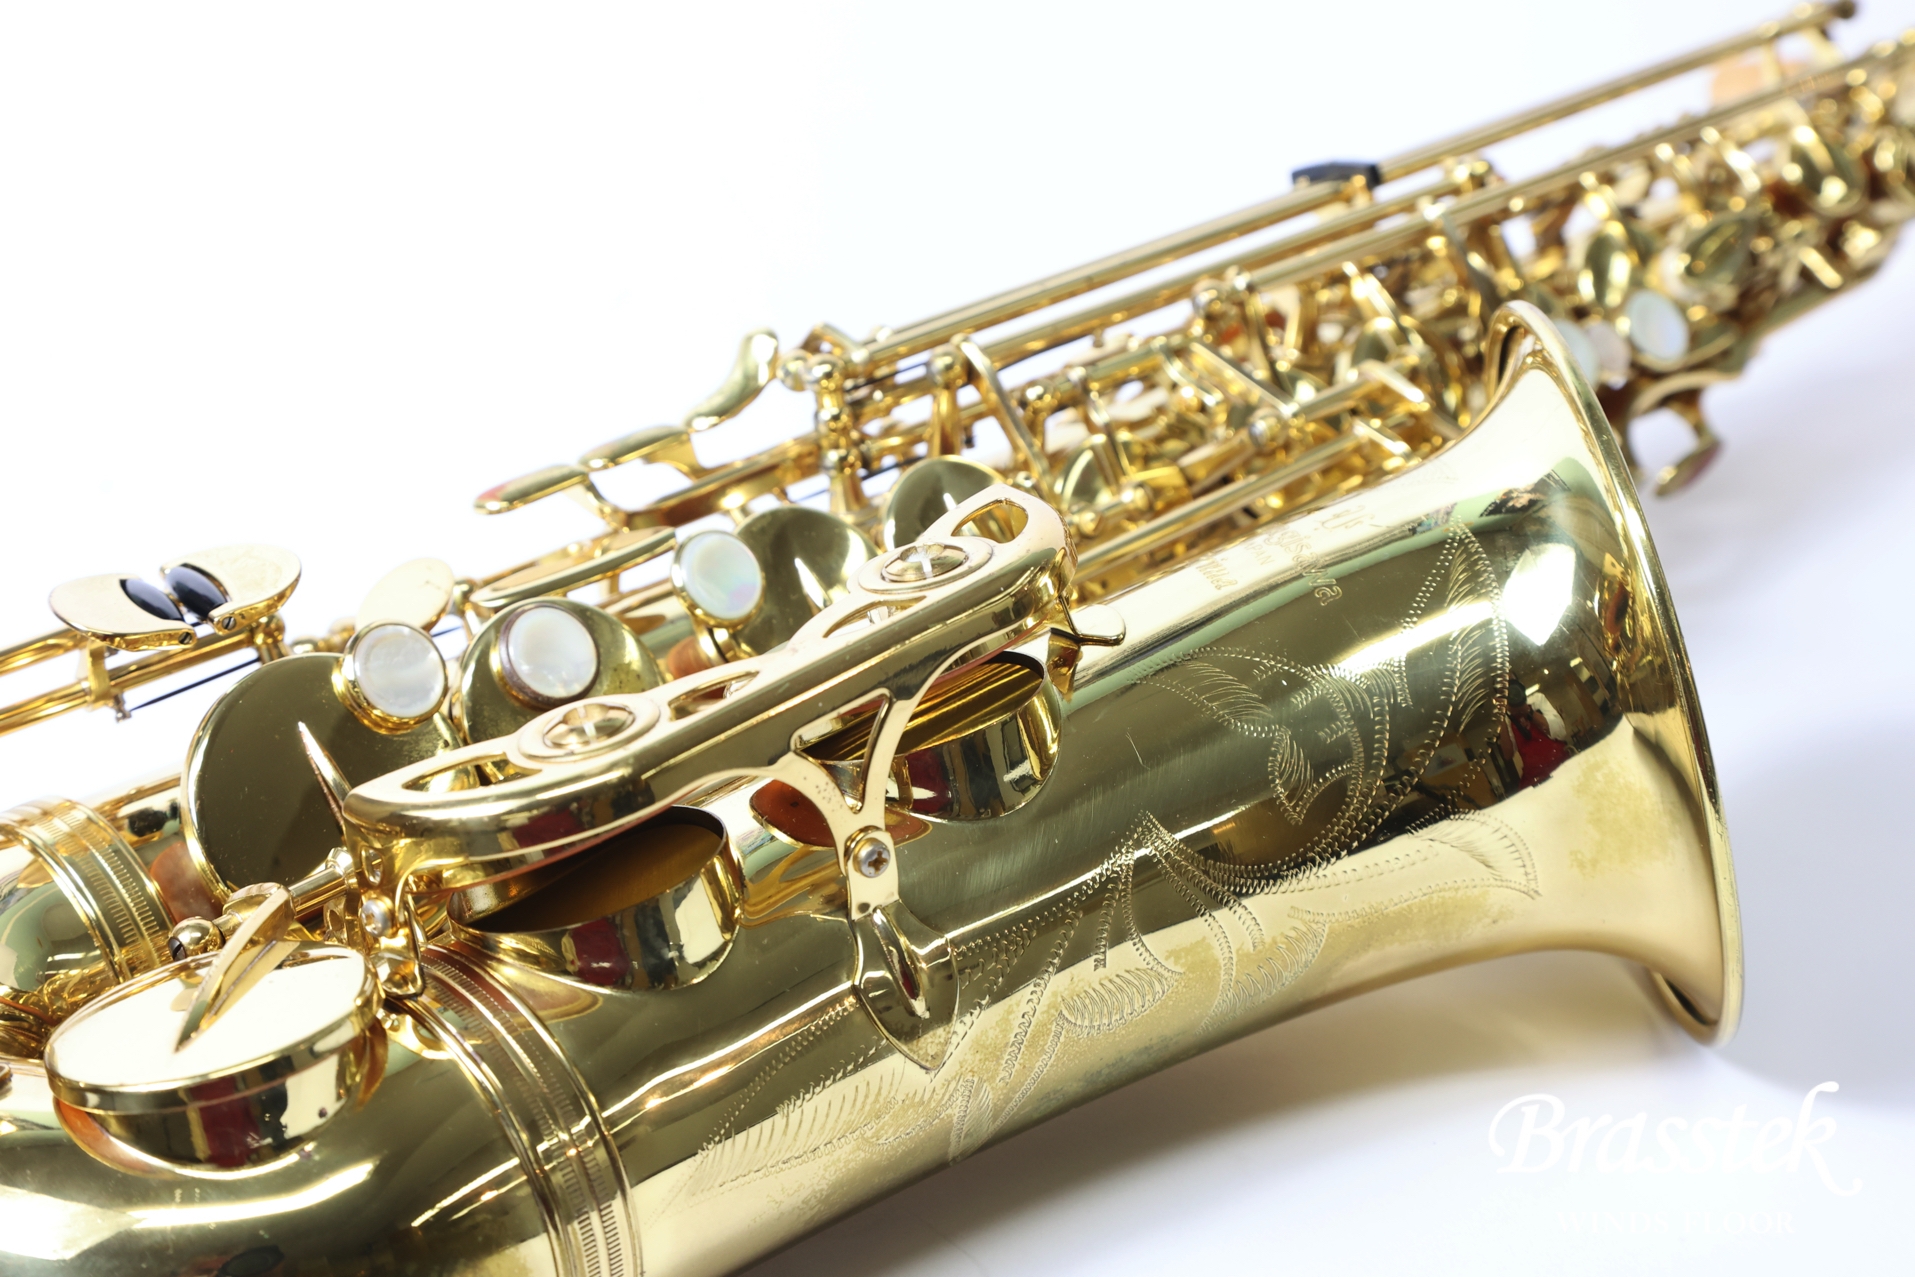 Yanagisawa Alto Saxophone A-901 | Brasstek Online Store